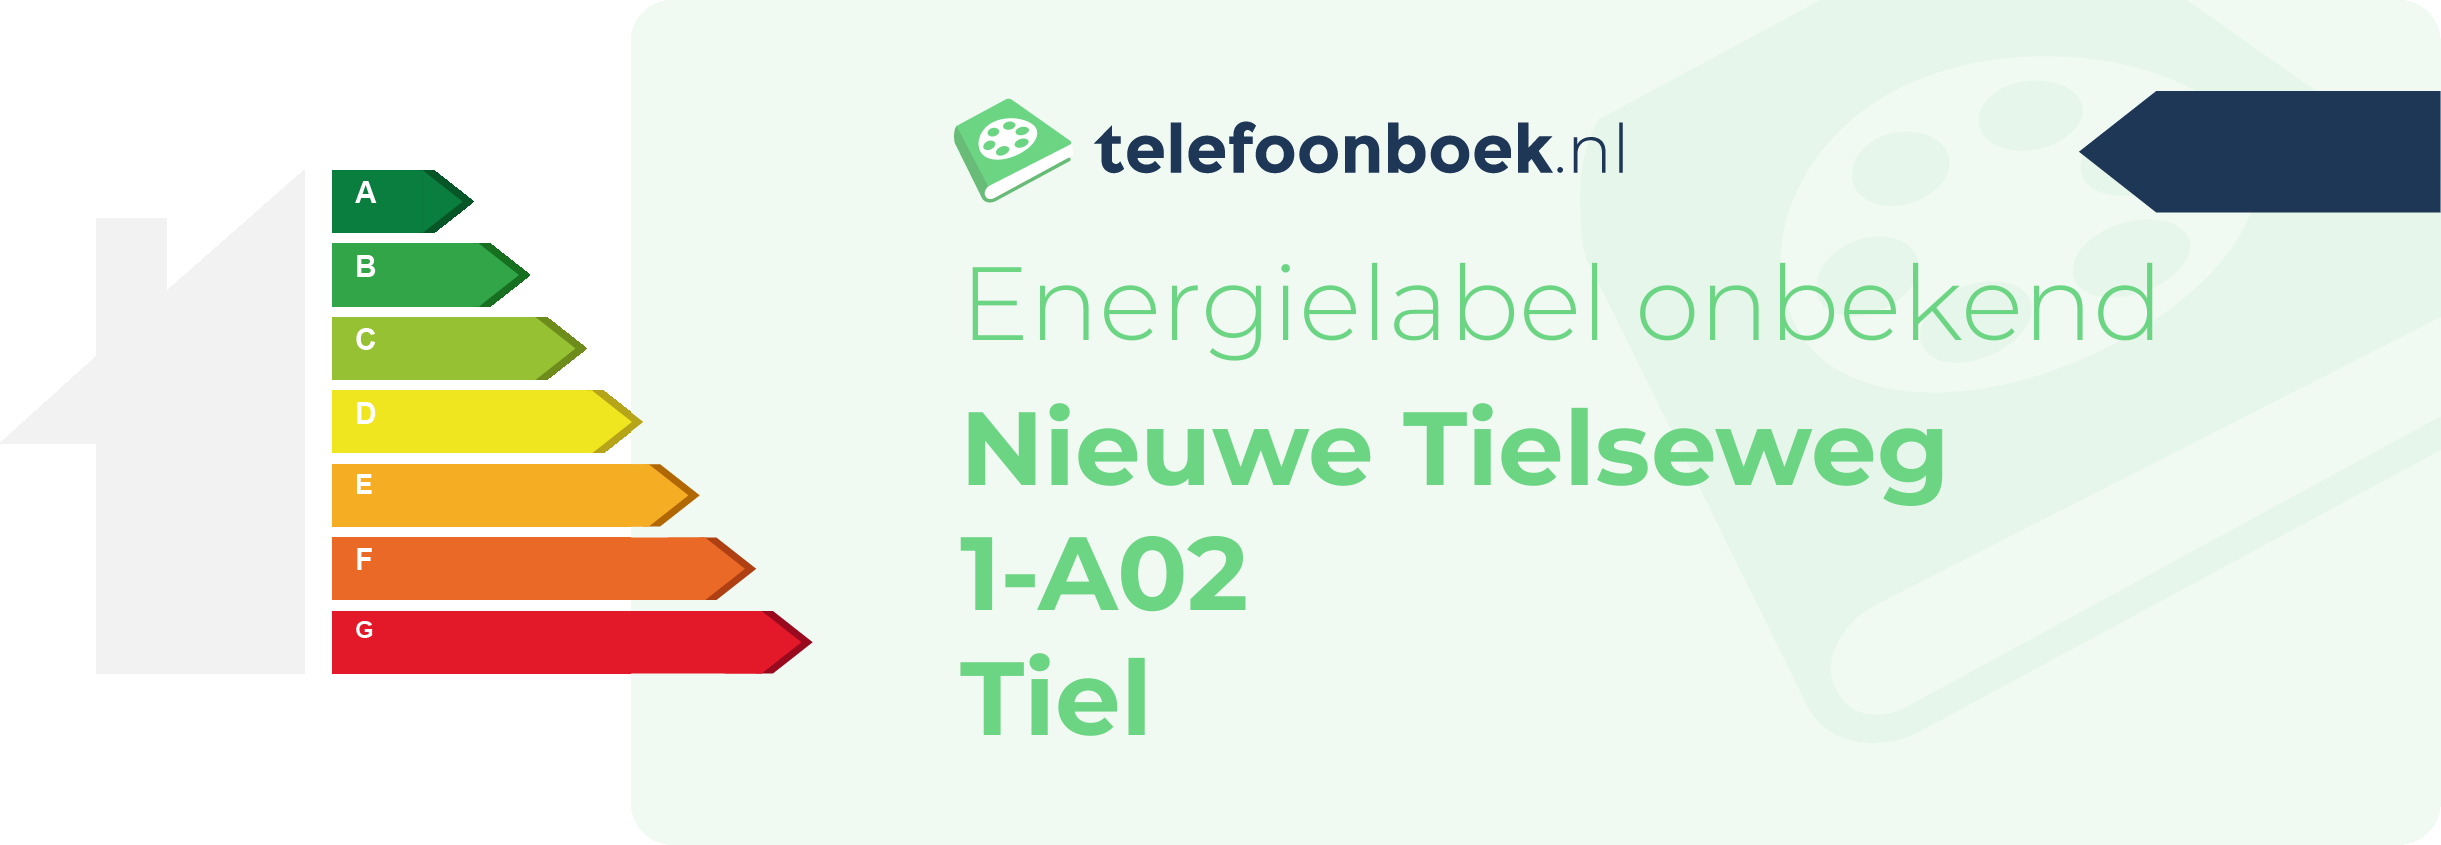 Energielabel Nieuwe Tielseweg 1-A02 Tiel